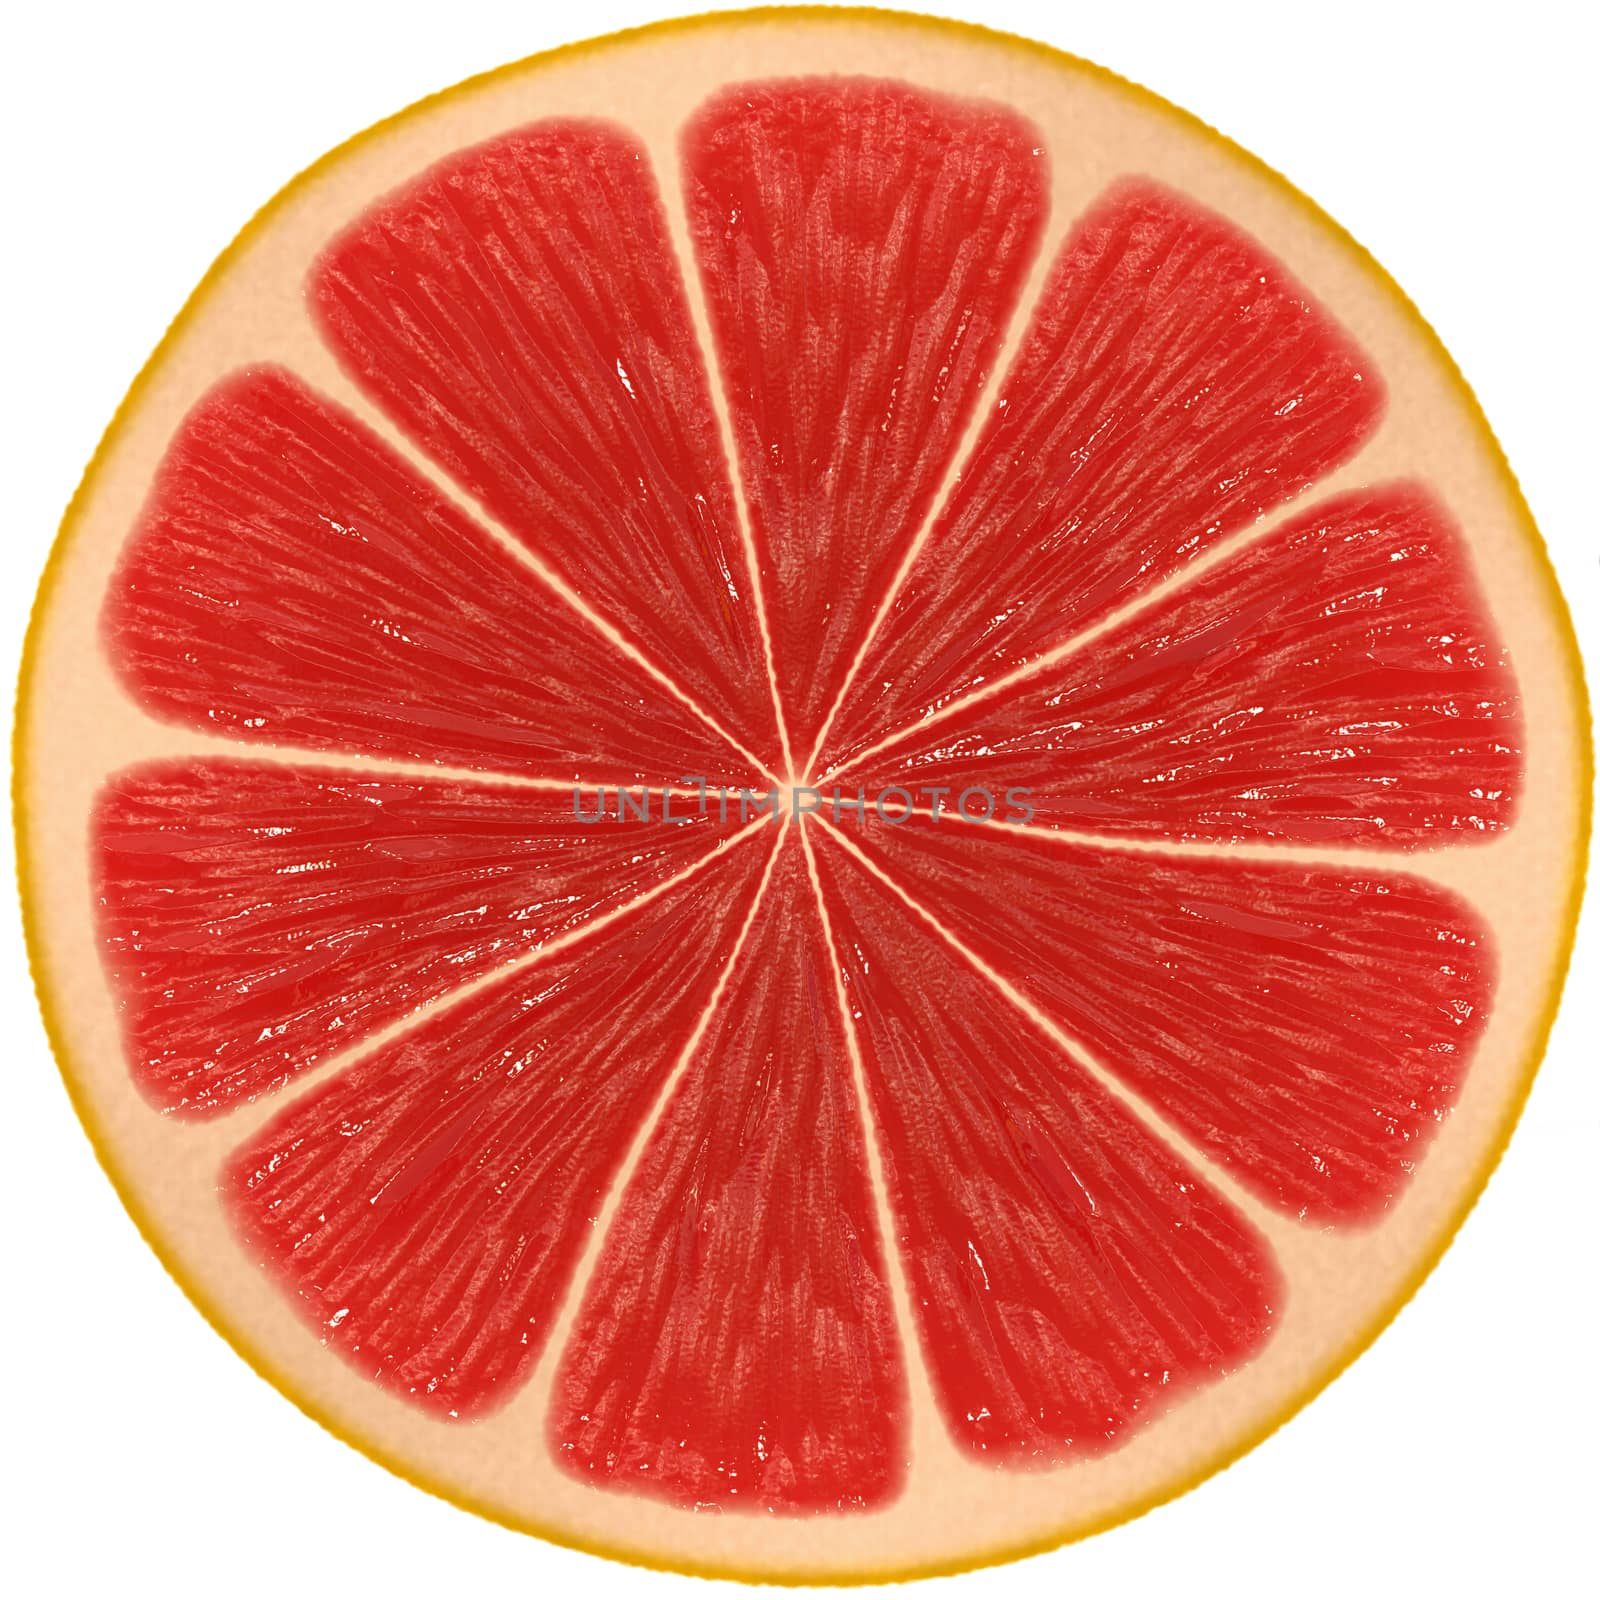 Slice of grapefruit isolated on white background by Attila